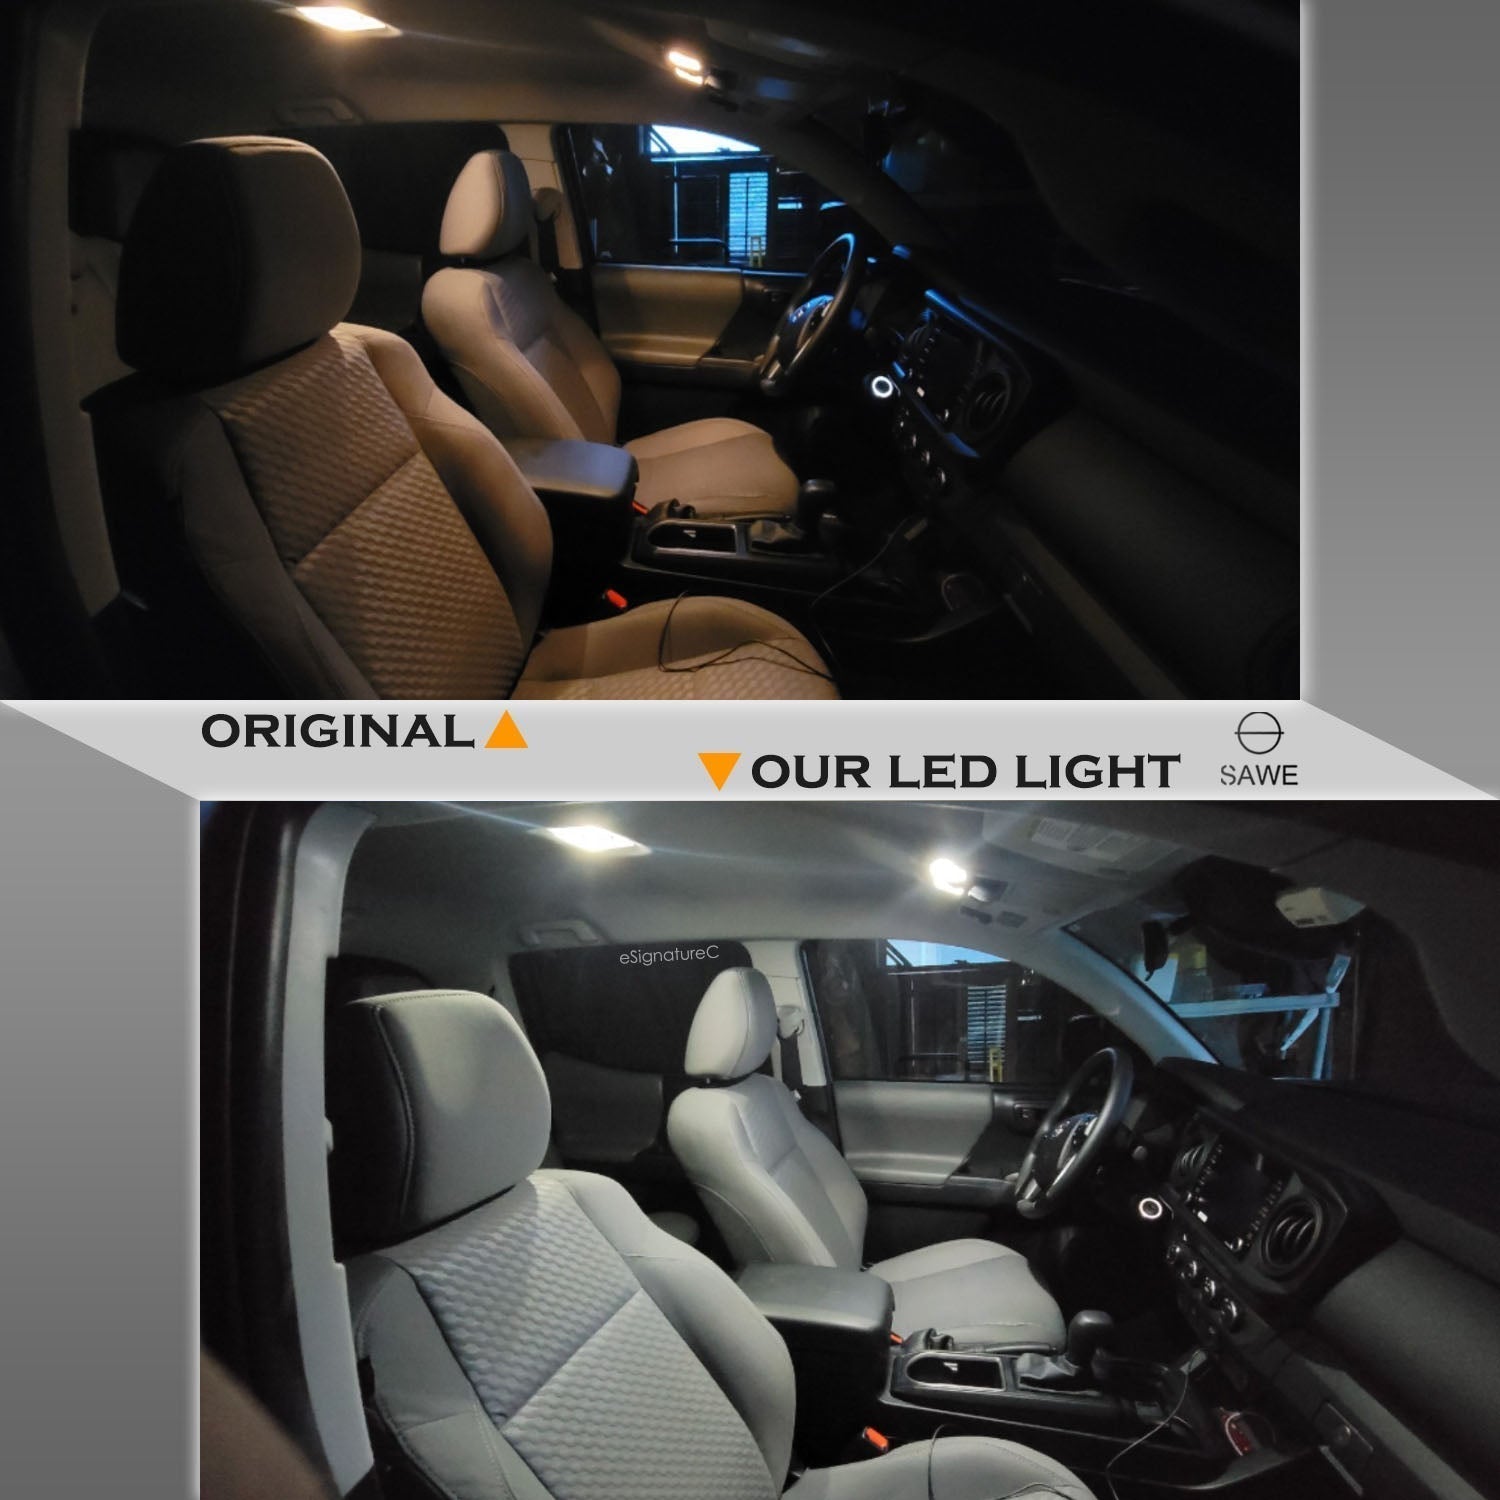 For Chevrolet Cobalt Interior LED Lights - Dome & Map Lights Package Kit for 2005 - 2010 - White